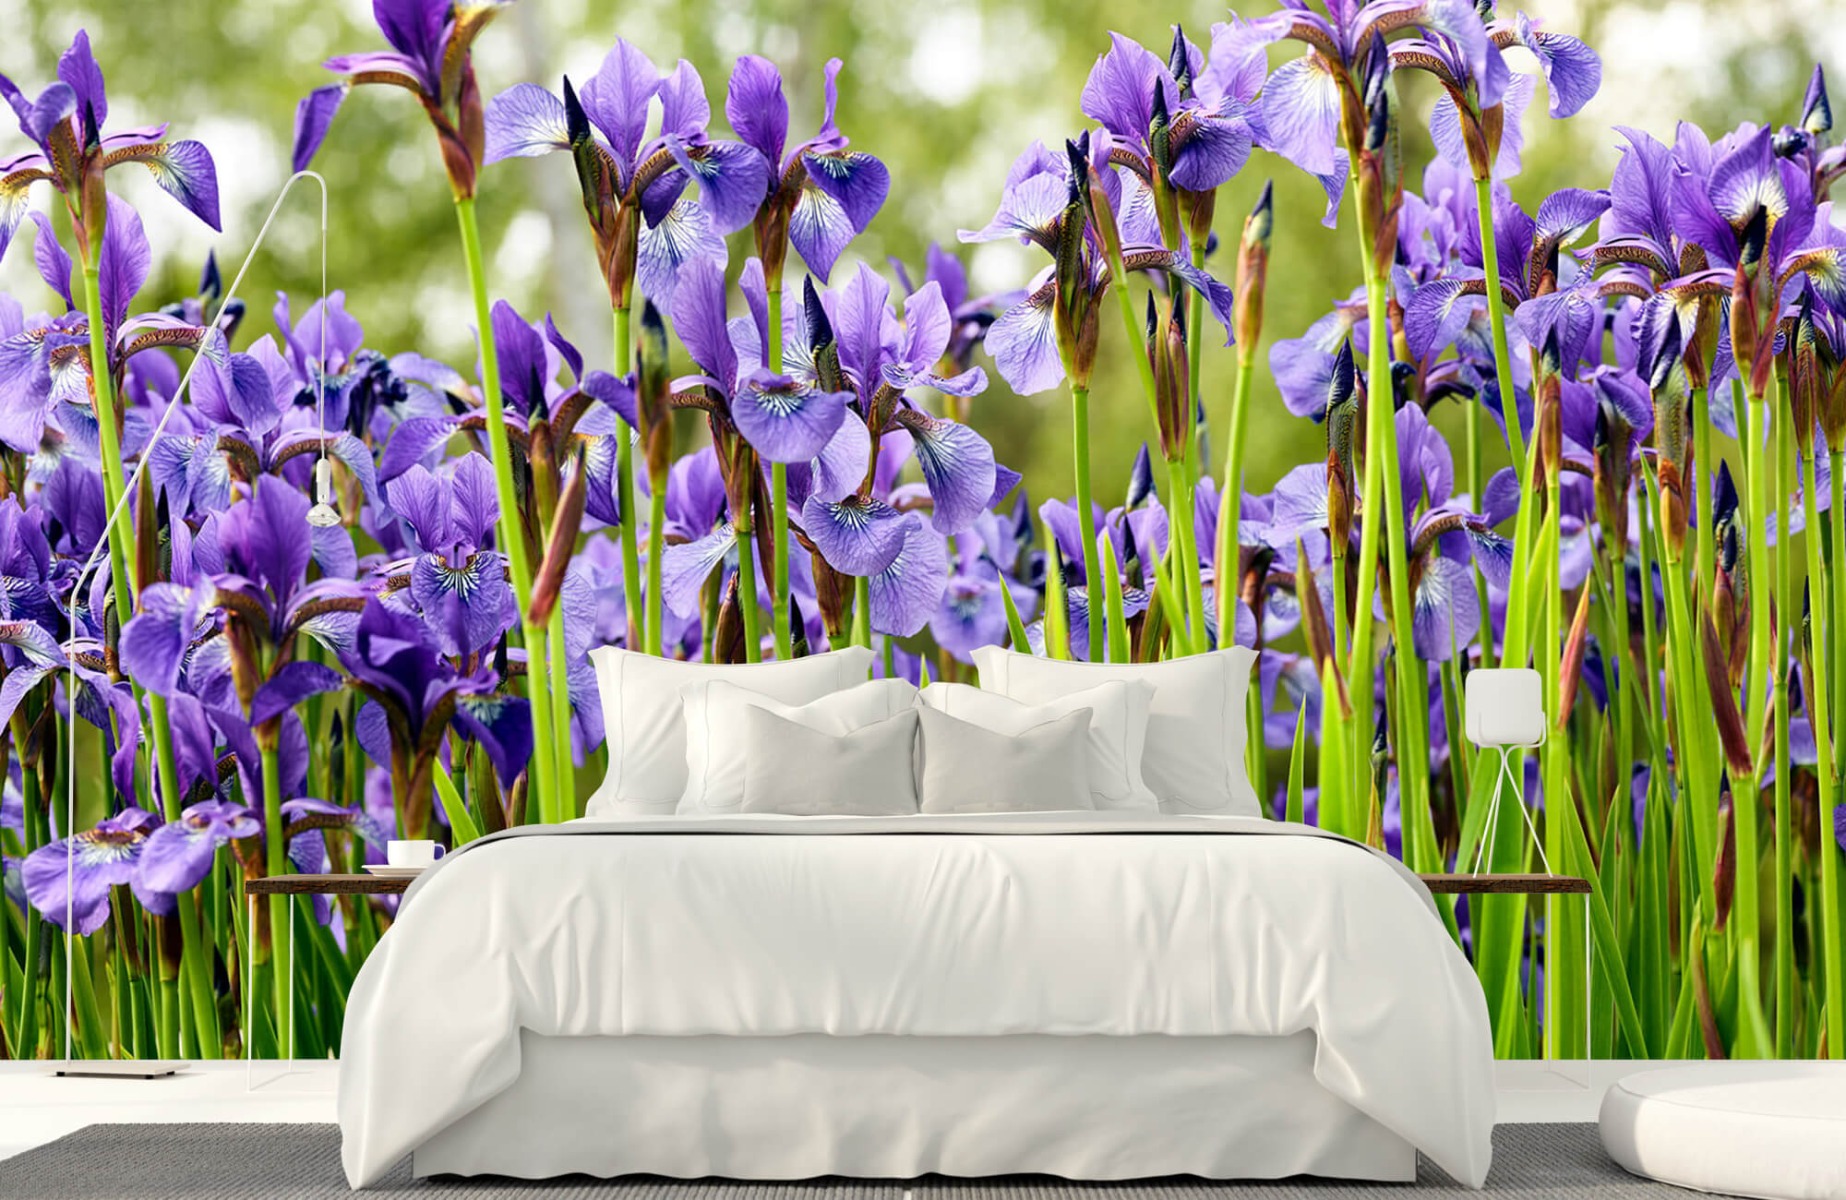 Flower fields - Irises  - Bedroom 17